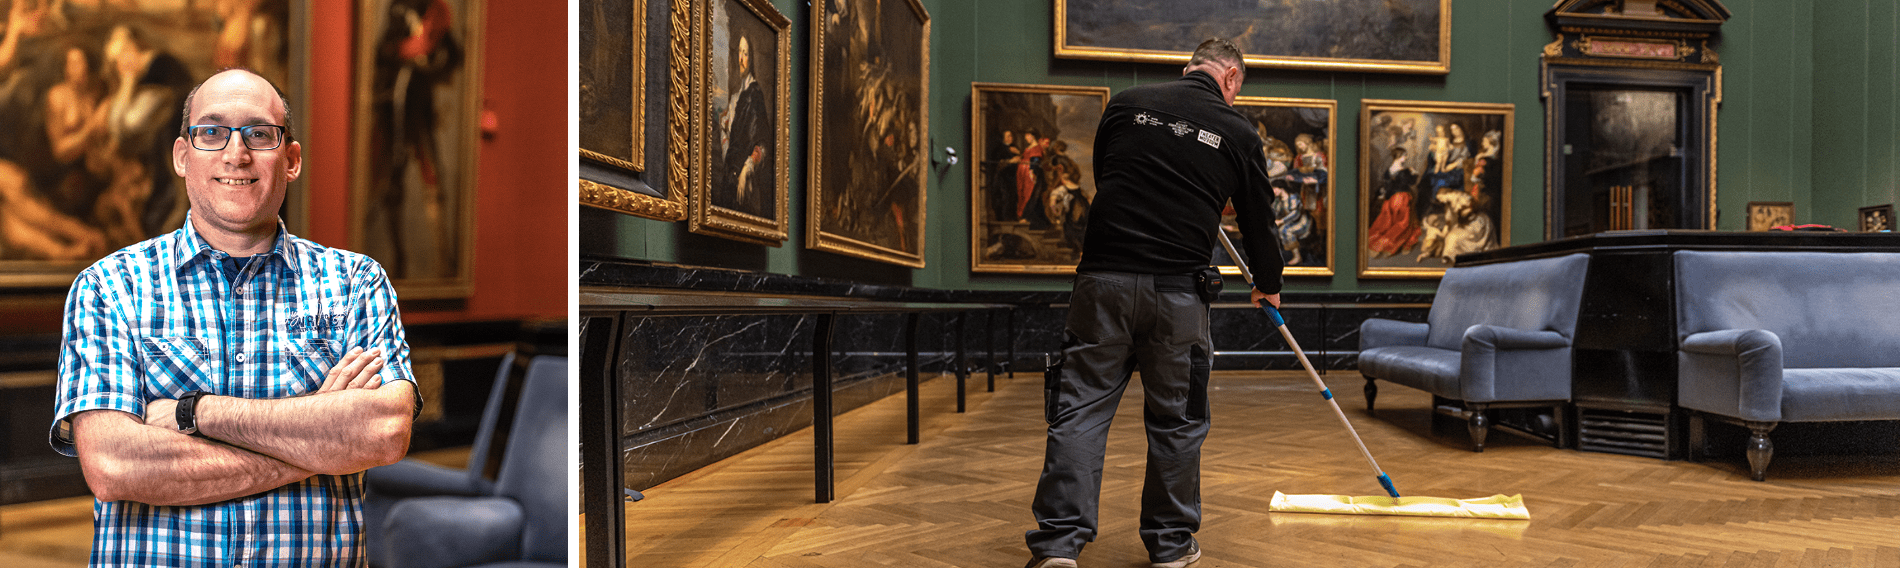 Floor cleaning in the Kunsthistorisches Museum Vienna (Interview)